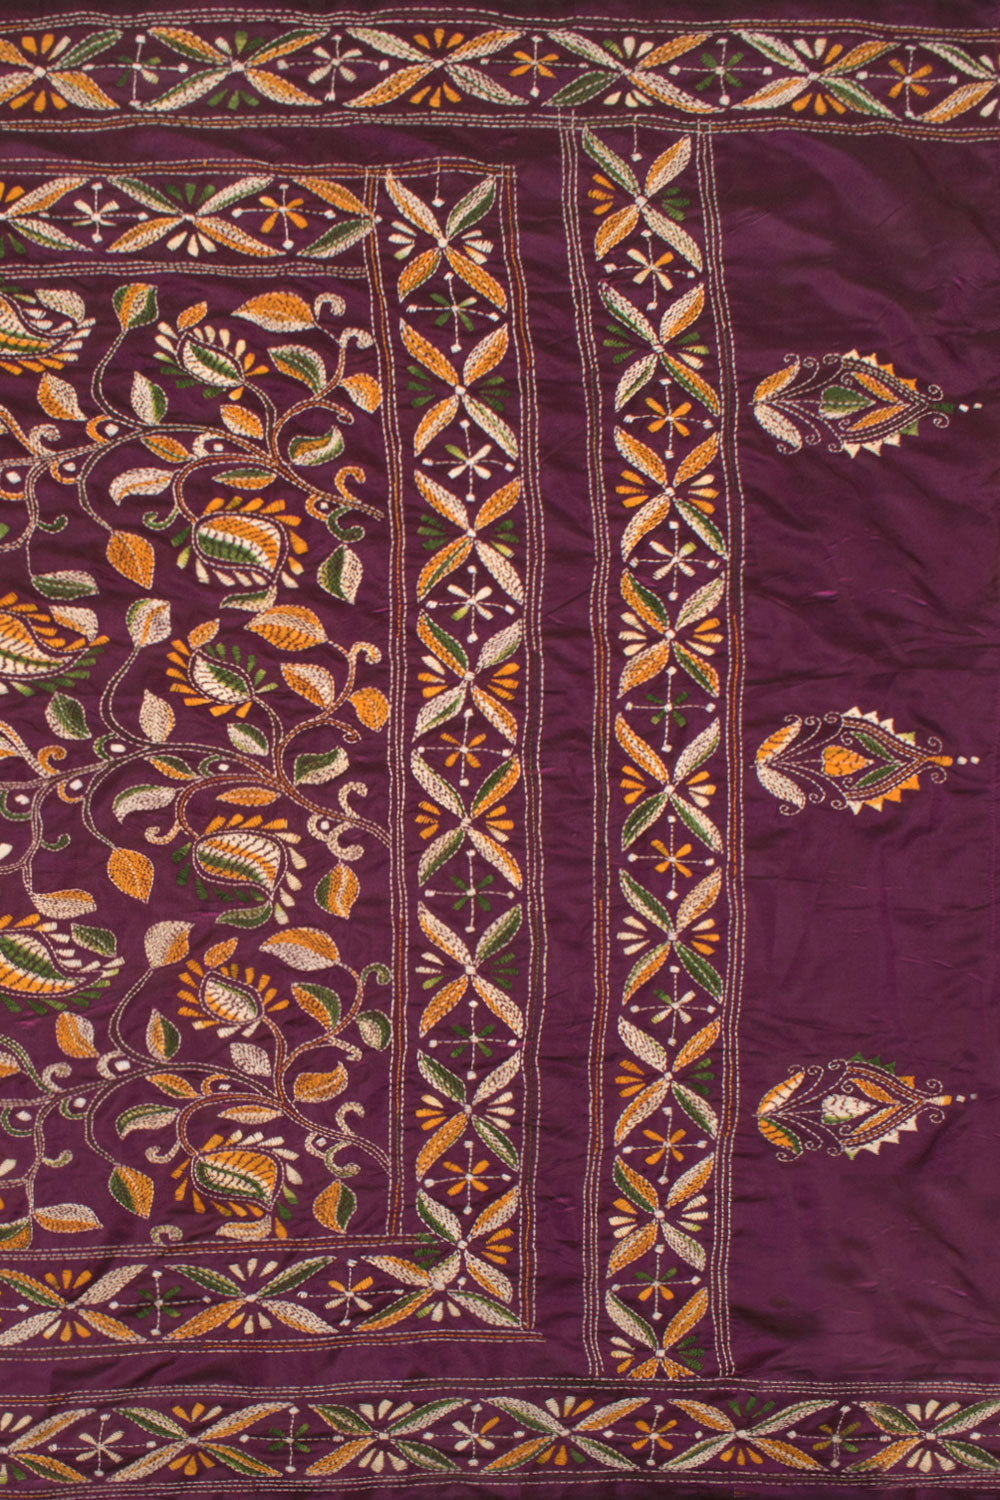 Kantha Embroidered Silk Saree 10058266